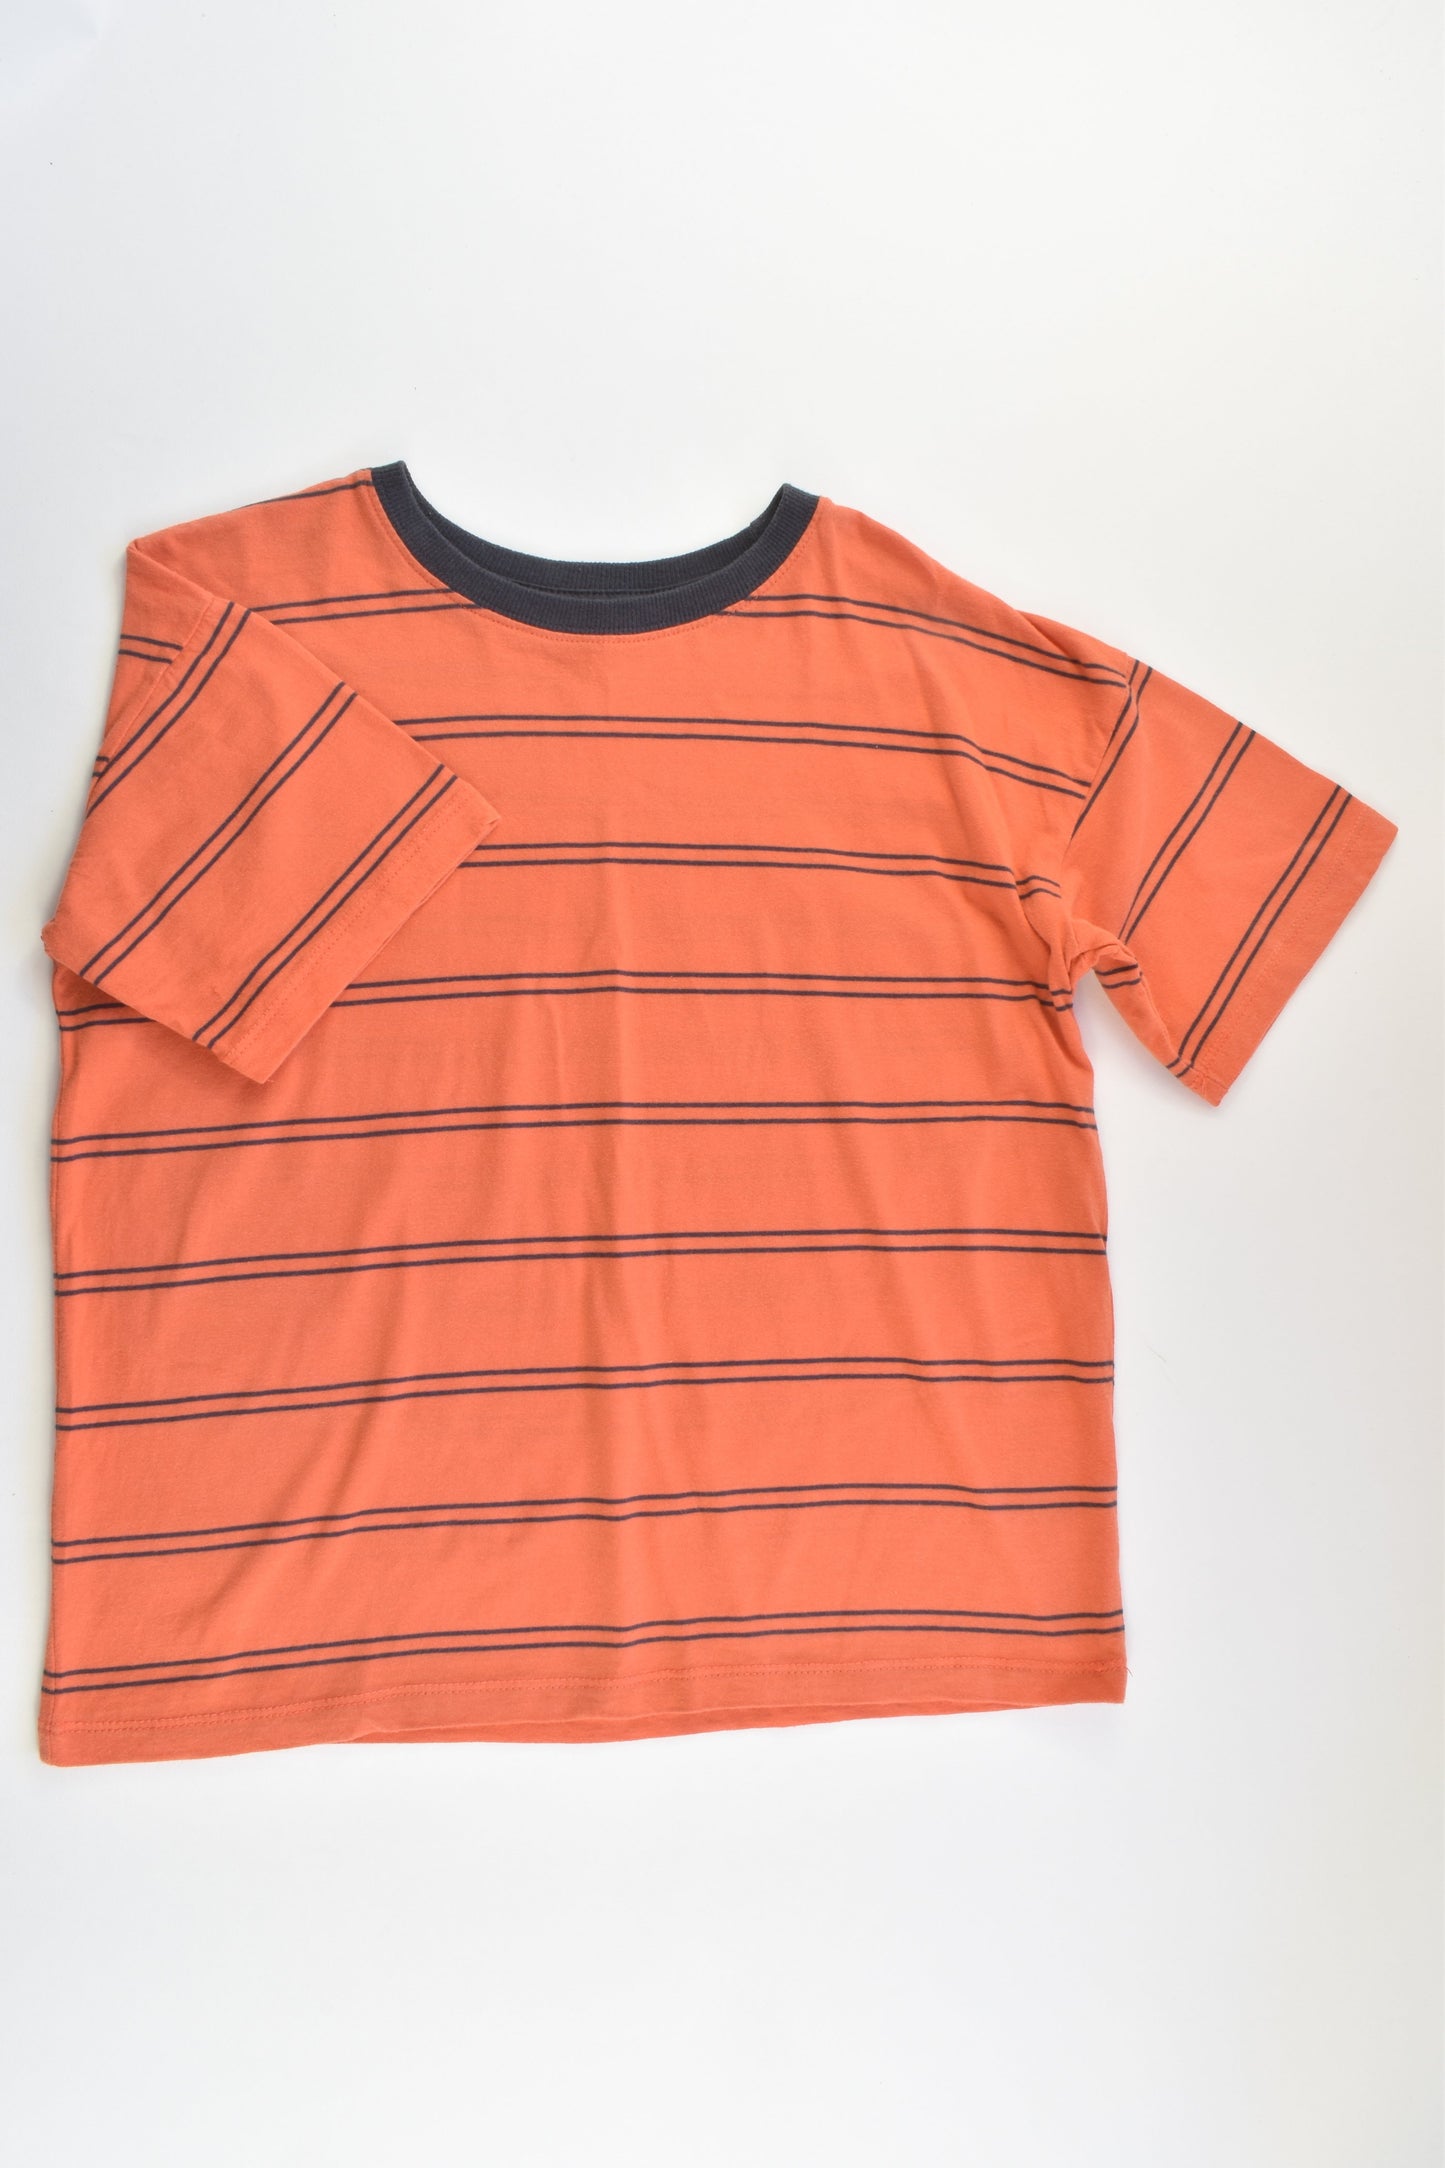 Cotton On Kids Size 9 Striped T-shirt